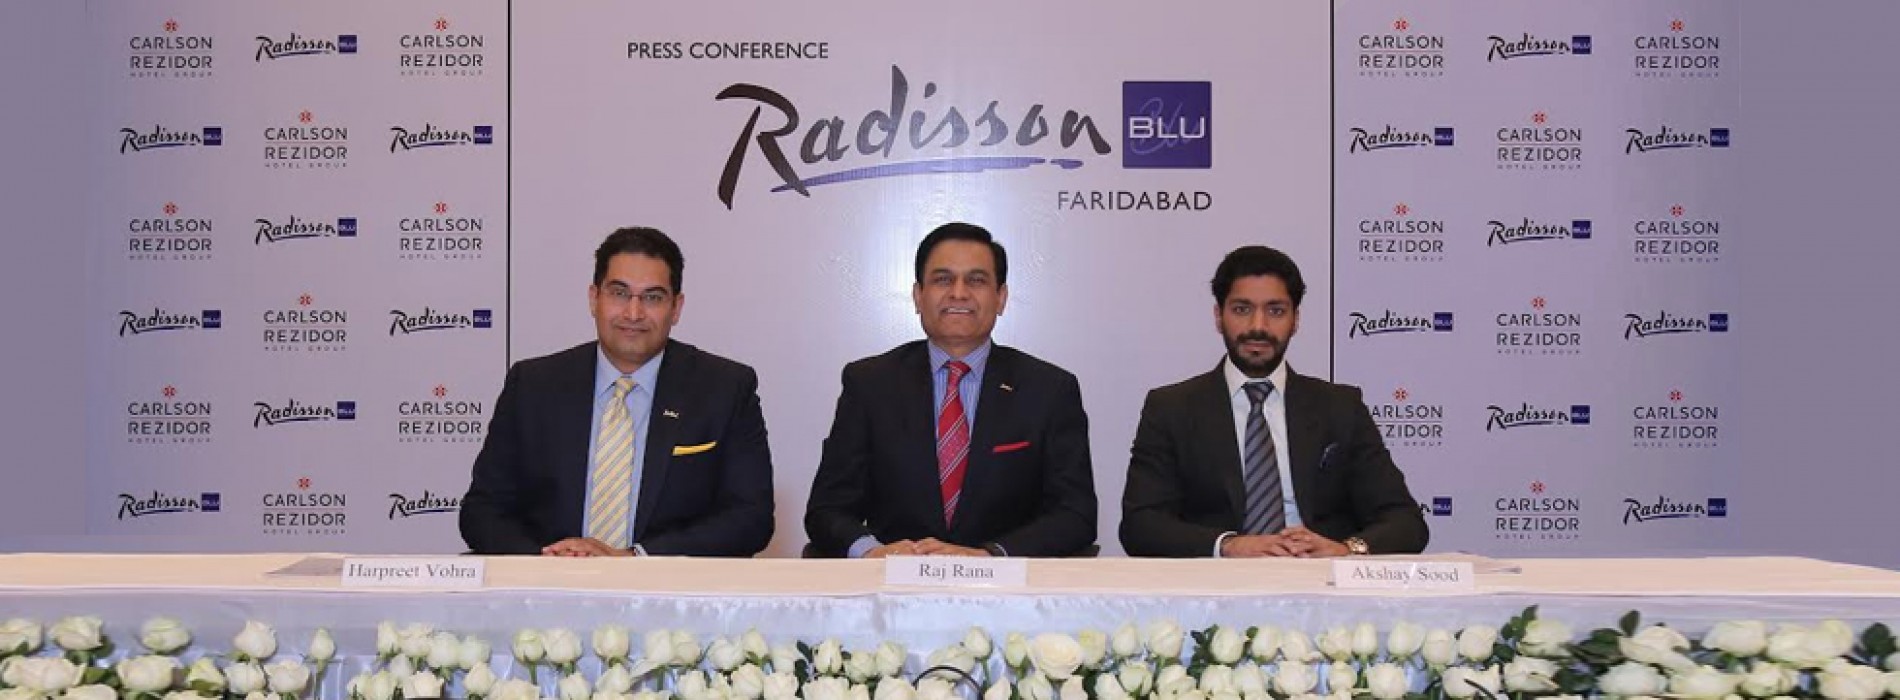 Radisson Blu Hotel Faridabad – The City’s First International Upper Upscale Hotel opens